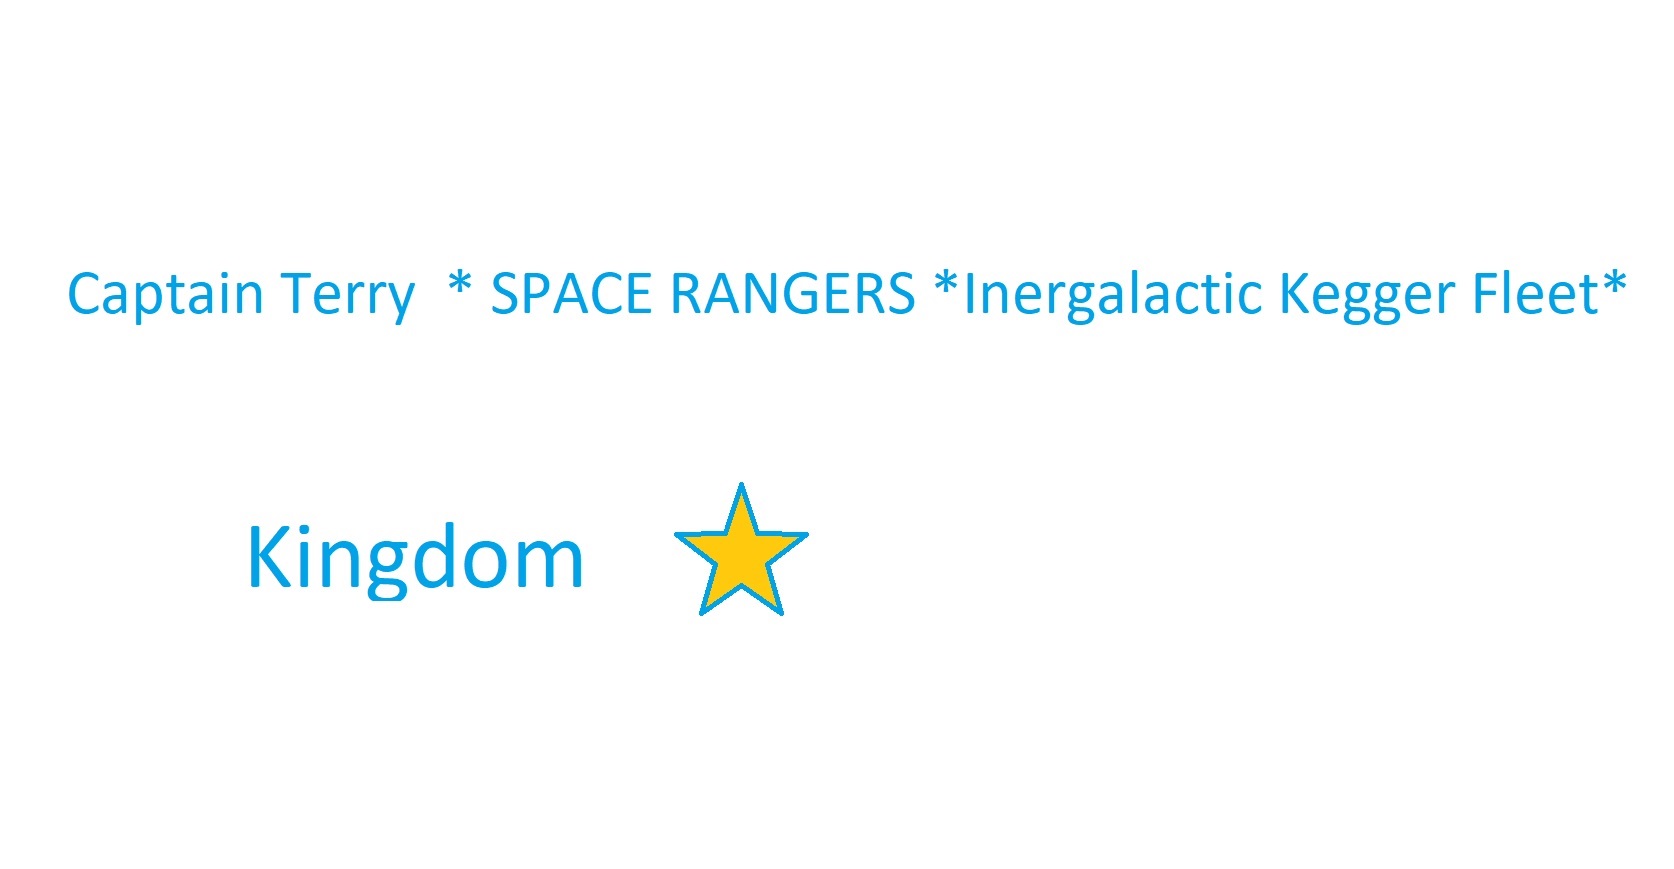 Captain Terry   SPACE RANGERS Inergalactic Kegger Kingdom Fleet  by Terry